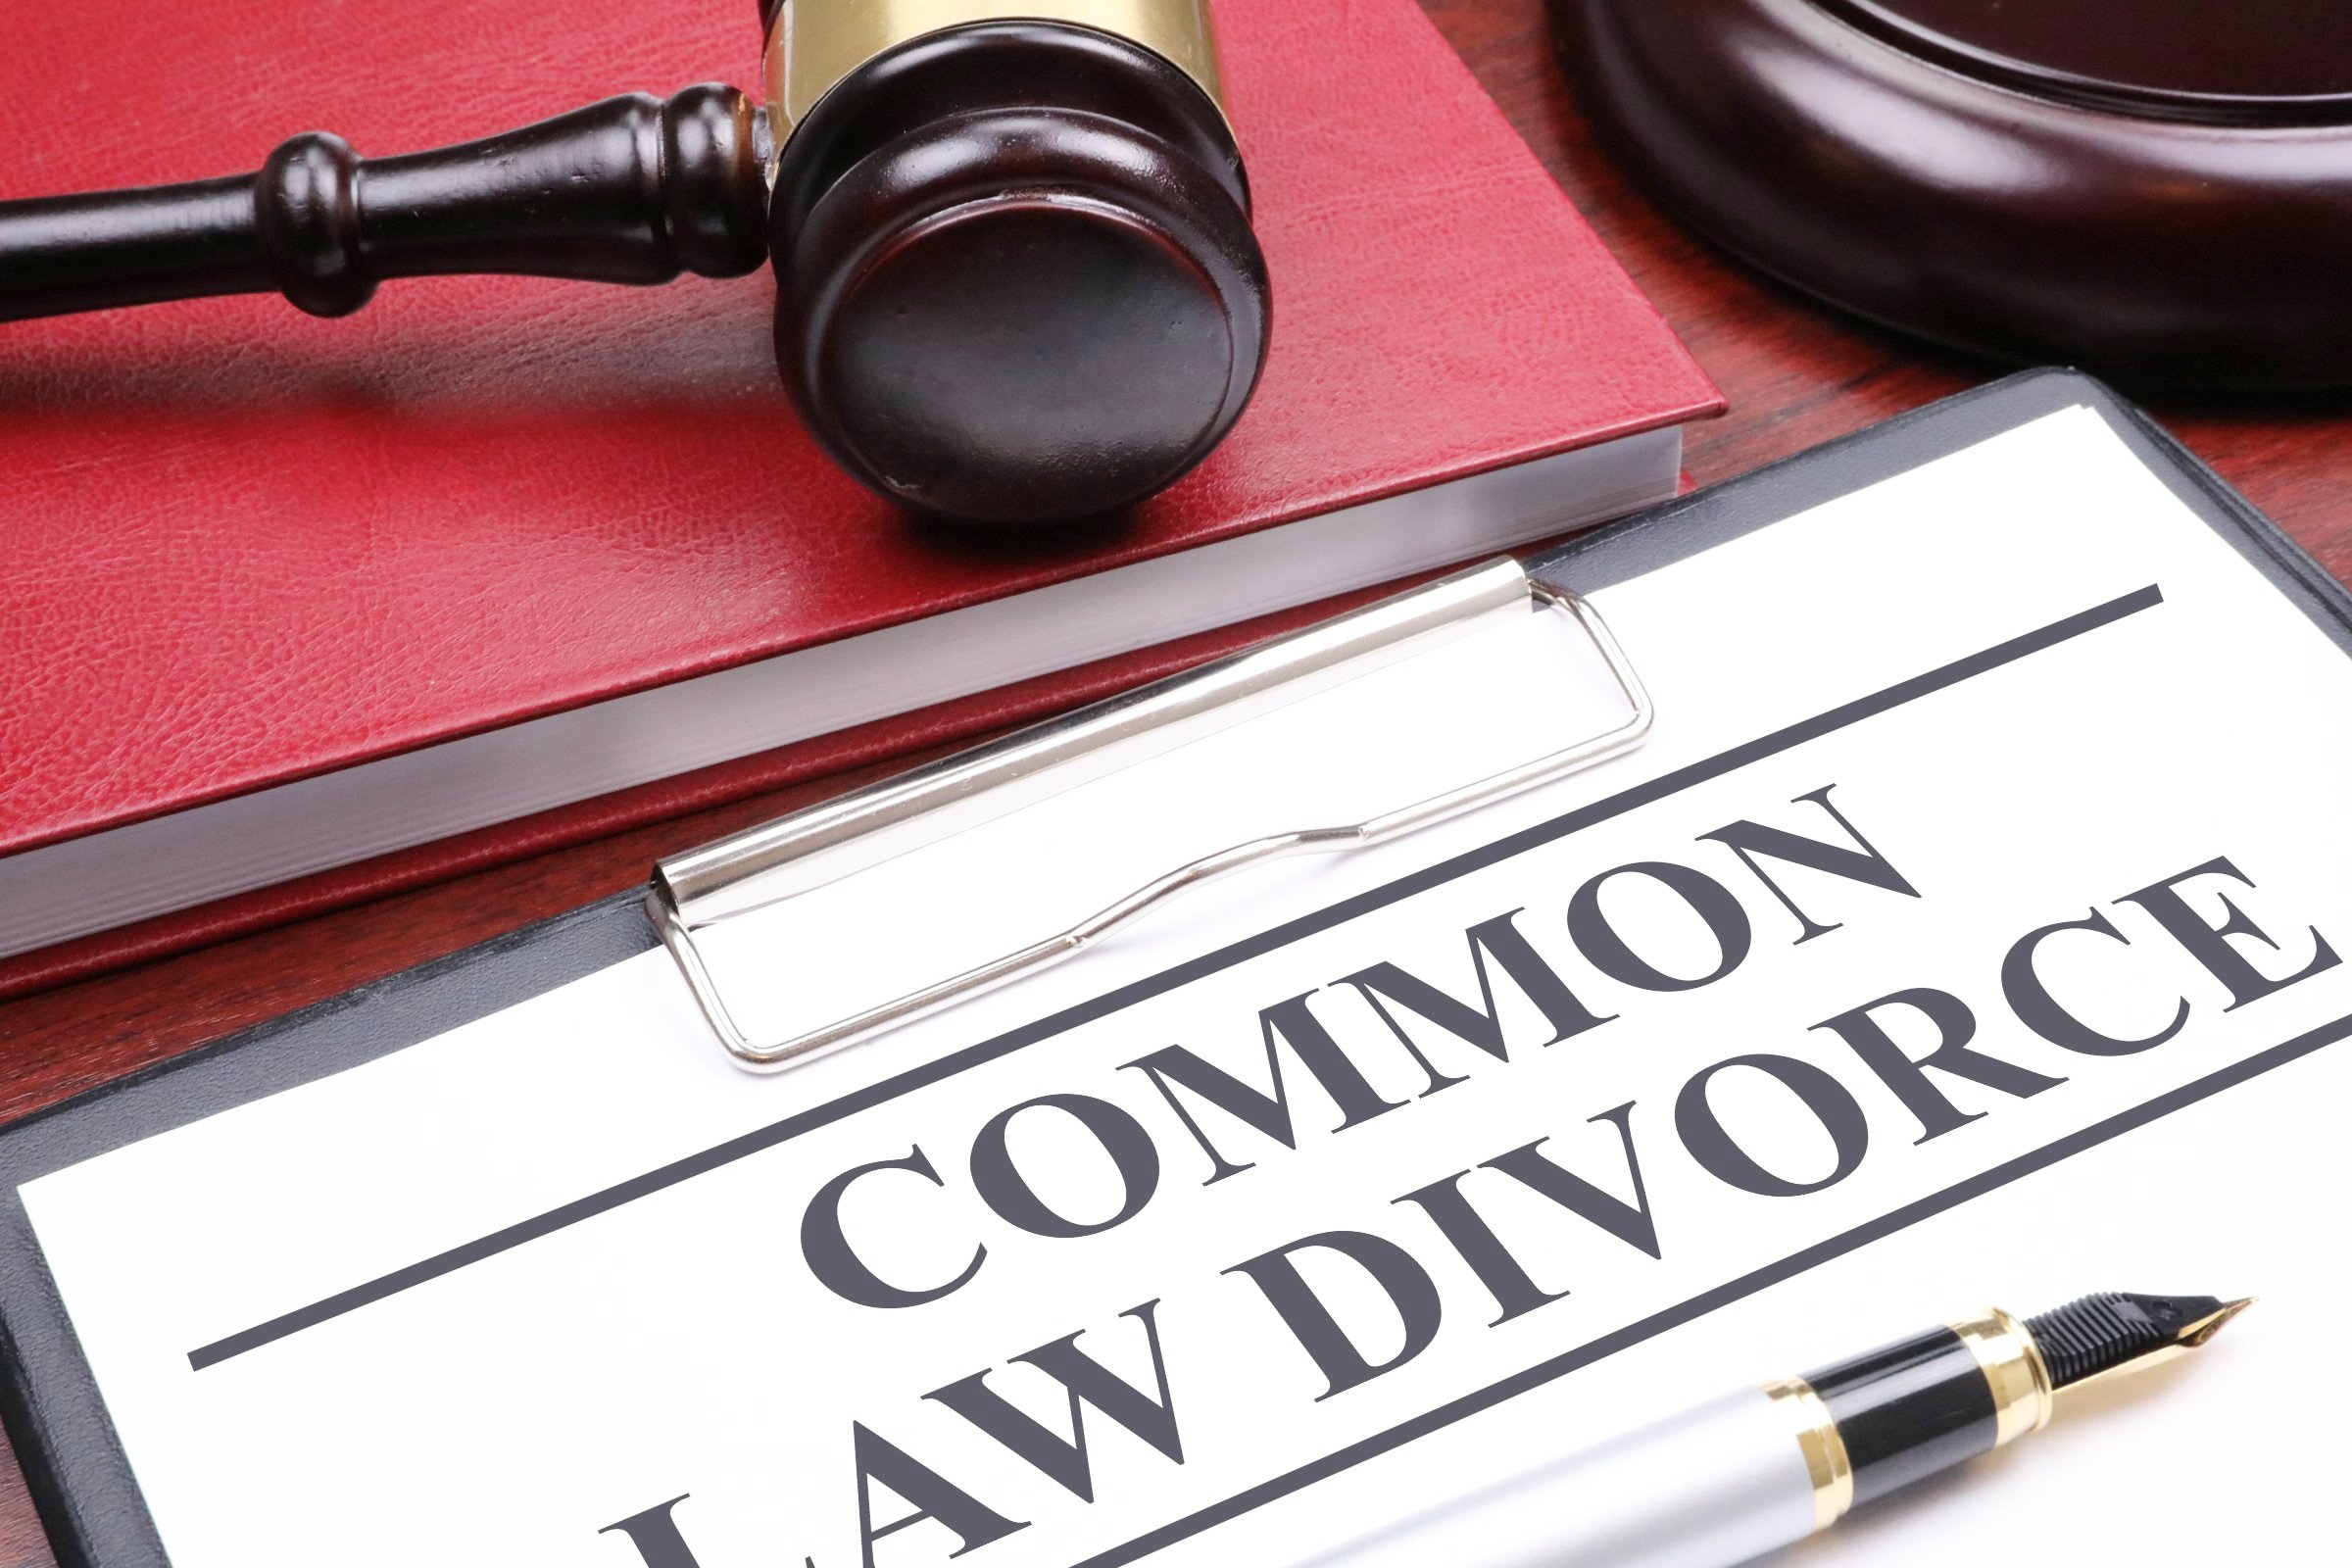 common law divorce